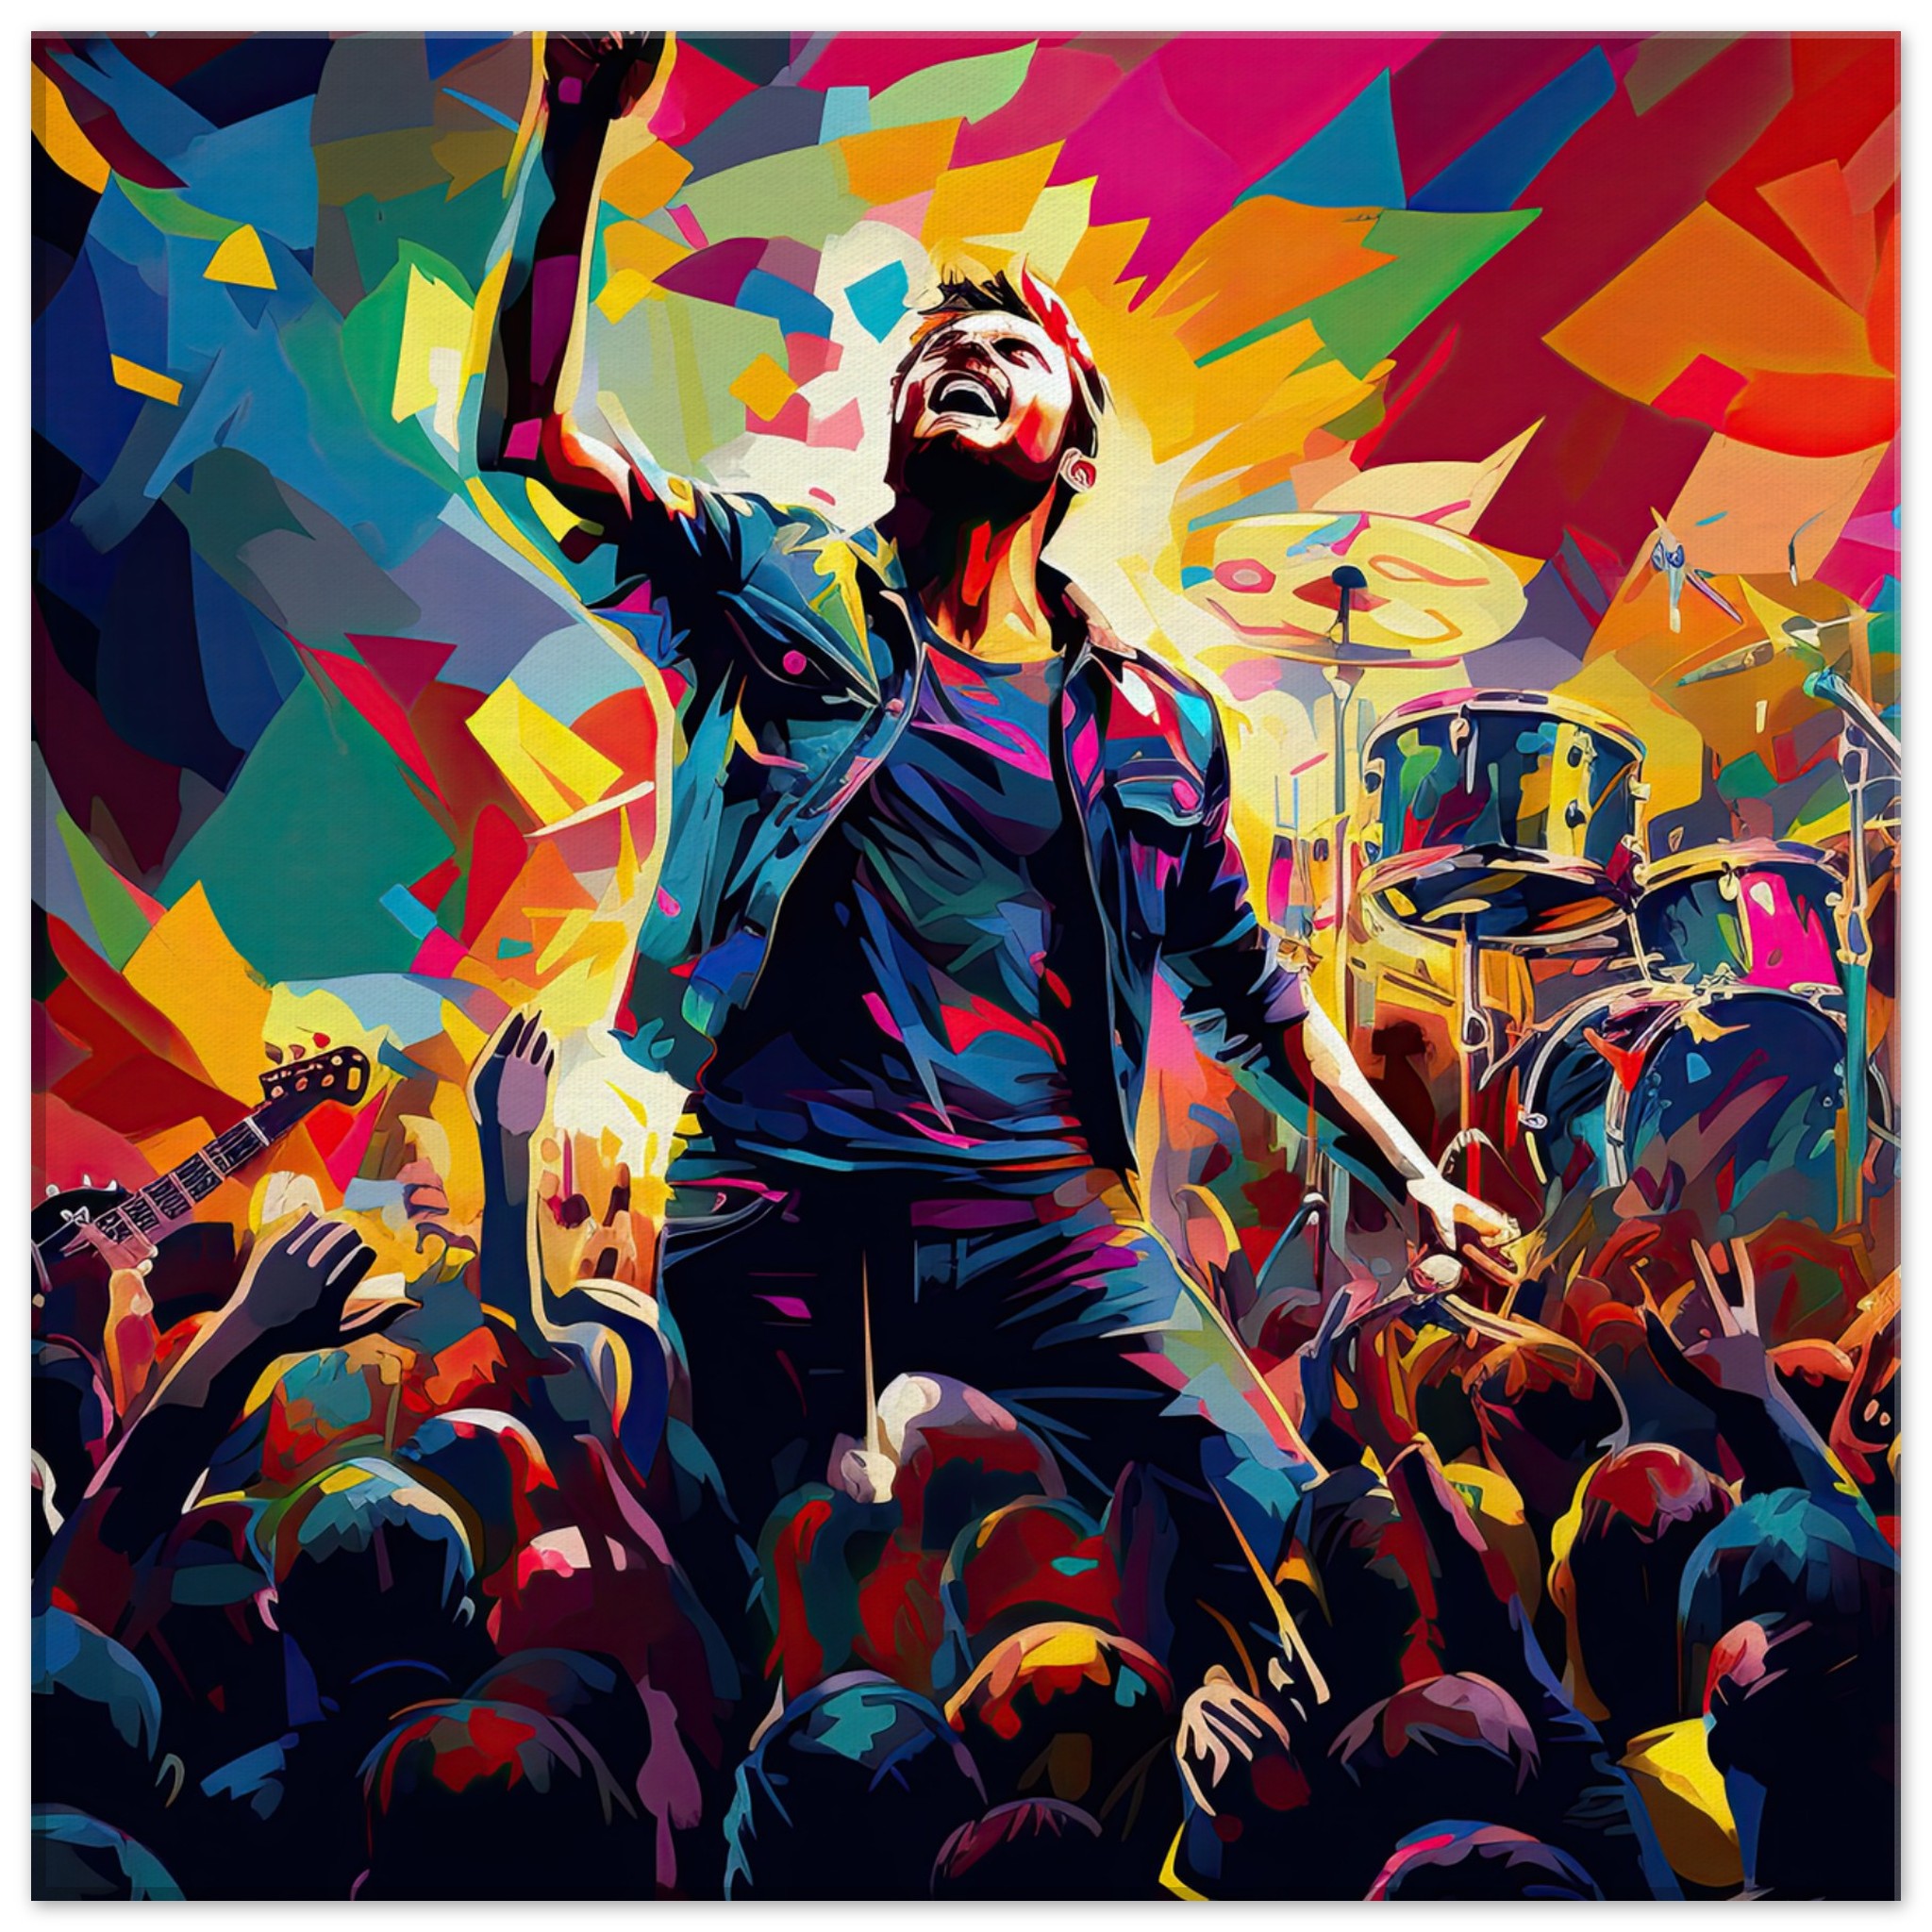 Concert in Color – Pop Art CanvasPrint – 50×50 cm / 20×20″, Thick